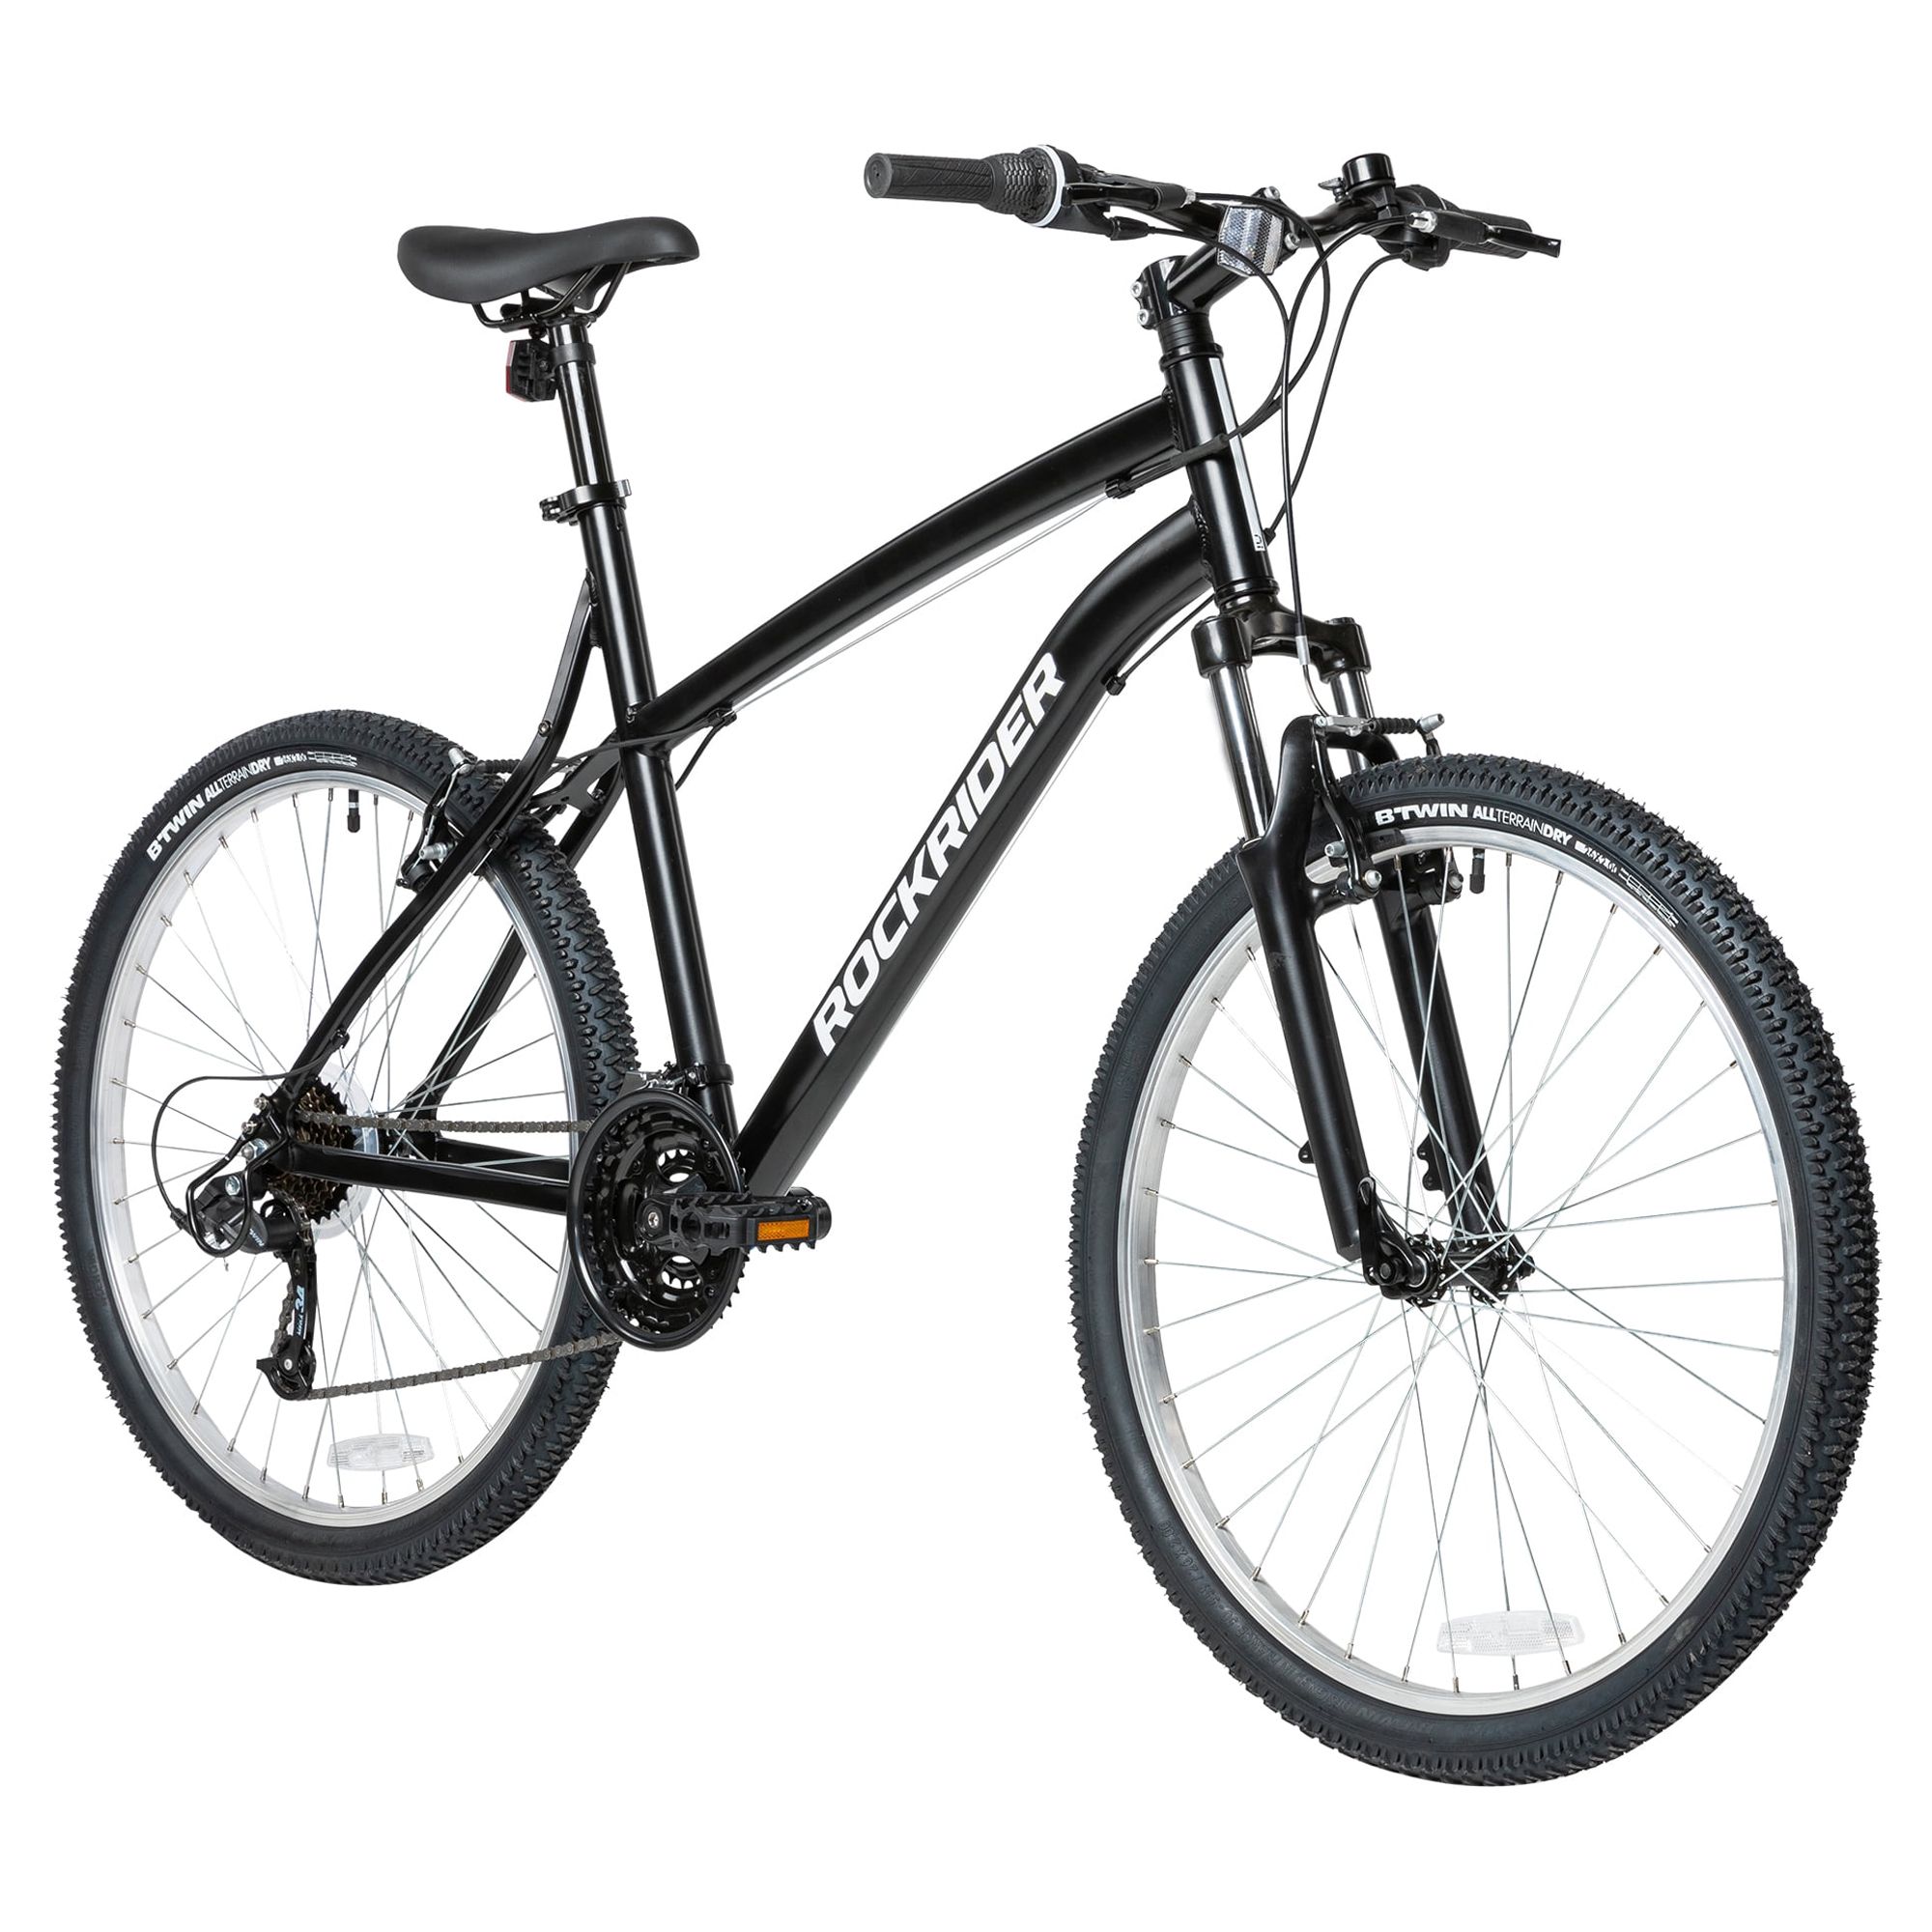 Decathlon Rockrider ST50, 21 Speed Aluminum Mountain Bike, 26", Unisex Black, Medium - image 1 of 13